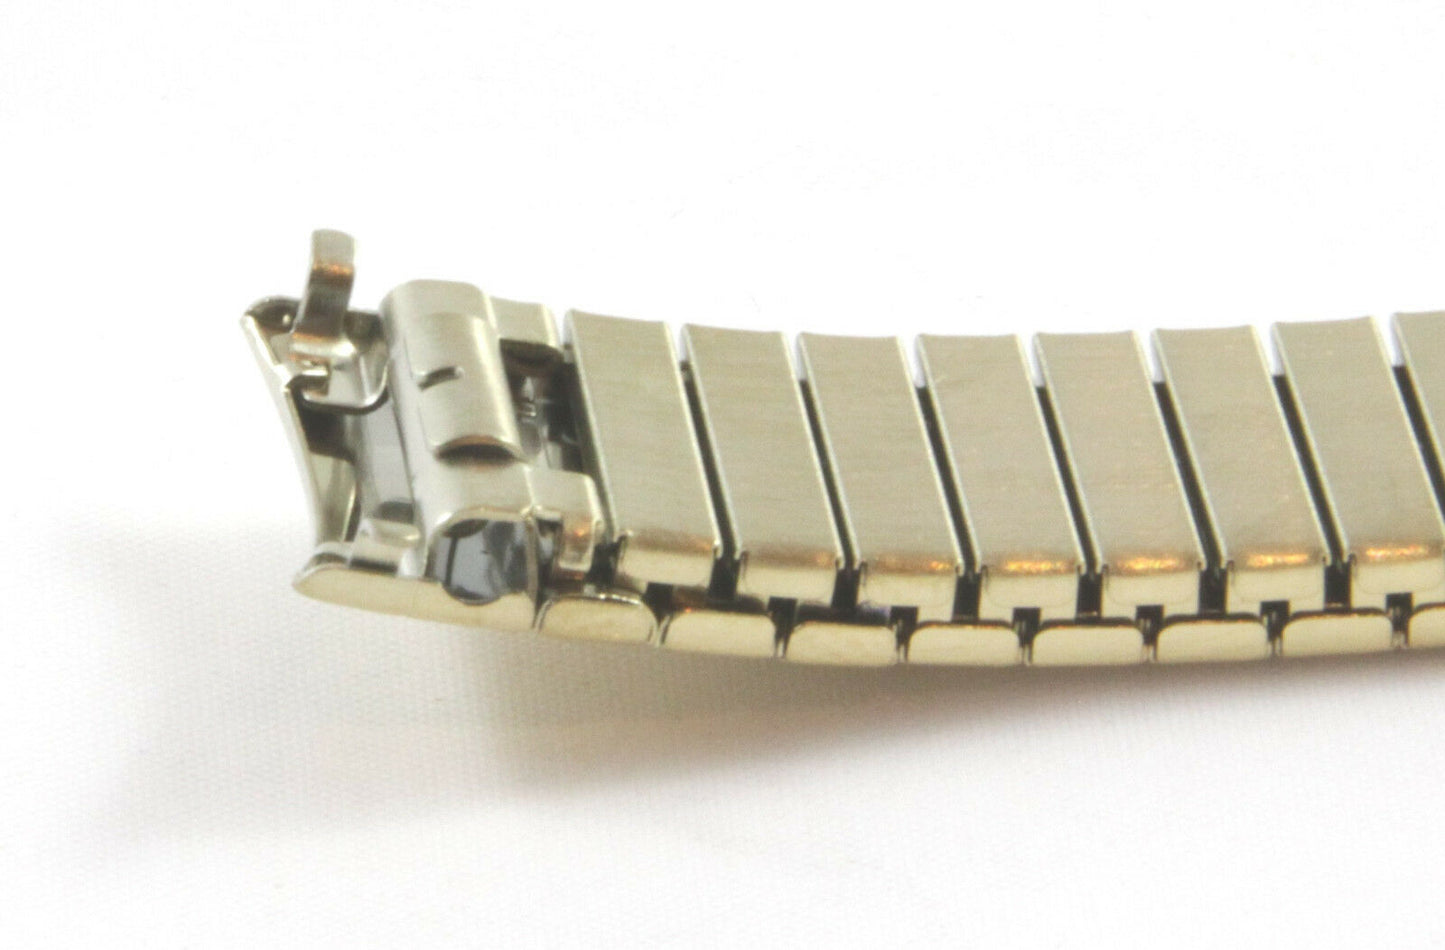 Timex Ersatzarmband T20481 Flexband Strechband Ersatzband 18mm - T2H301 & T20471